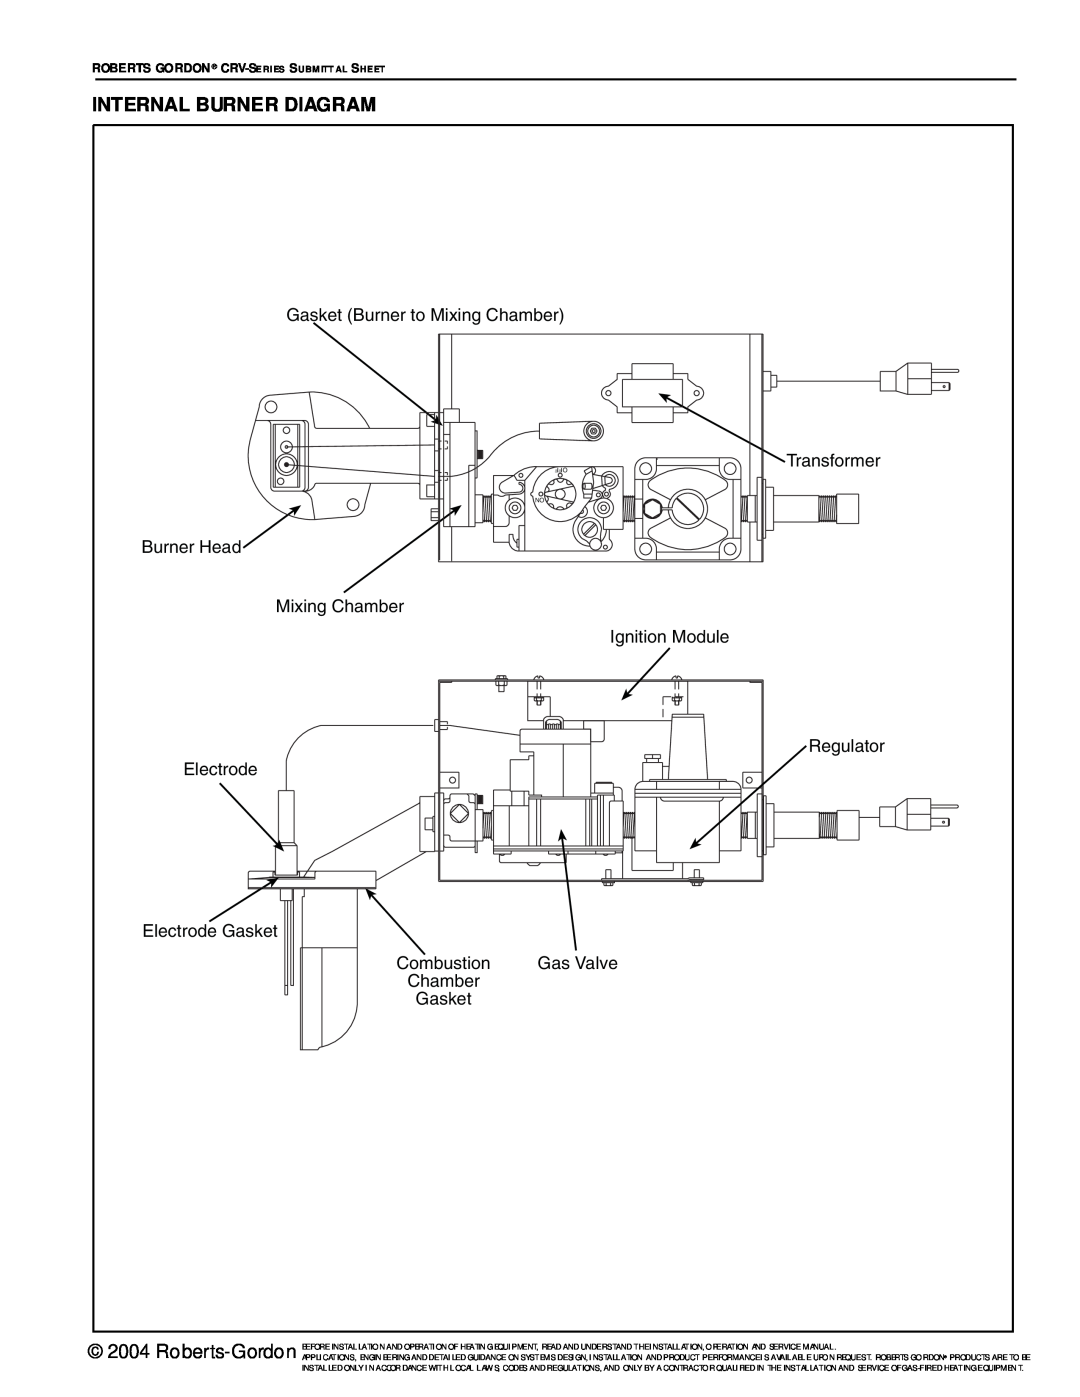 Roberts Gorden CRV-Series Internal Burner Diagram, Gasket Burner to Mixing Chamber Transformer, Combustion, Gas Valve 